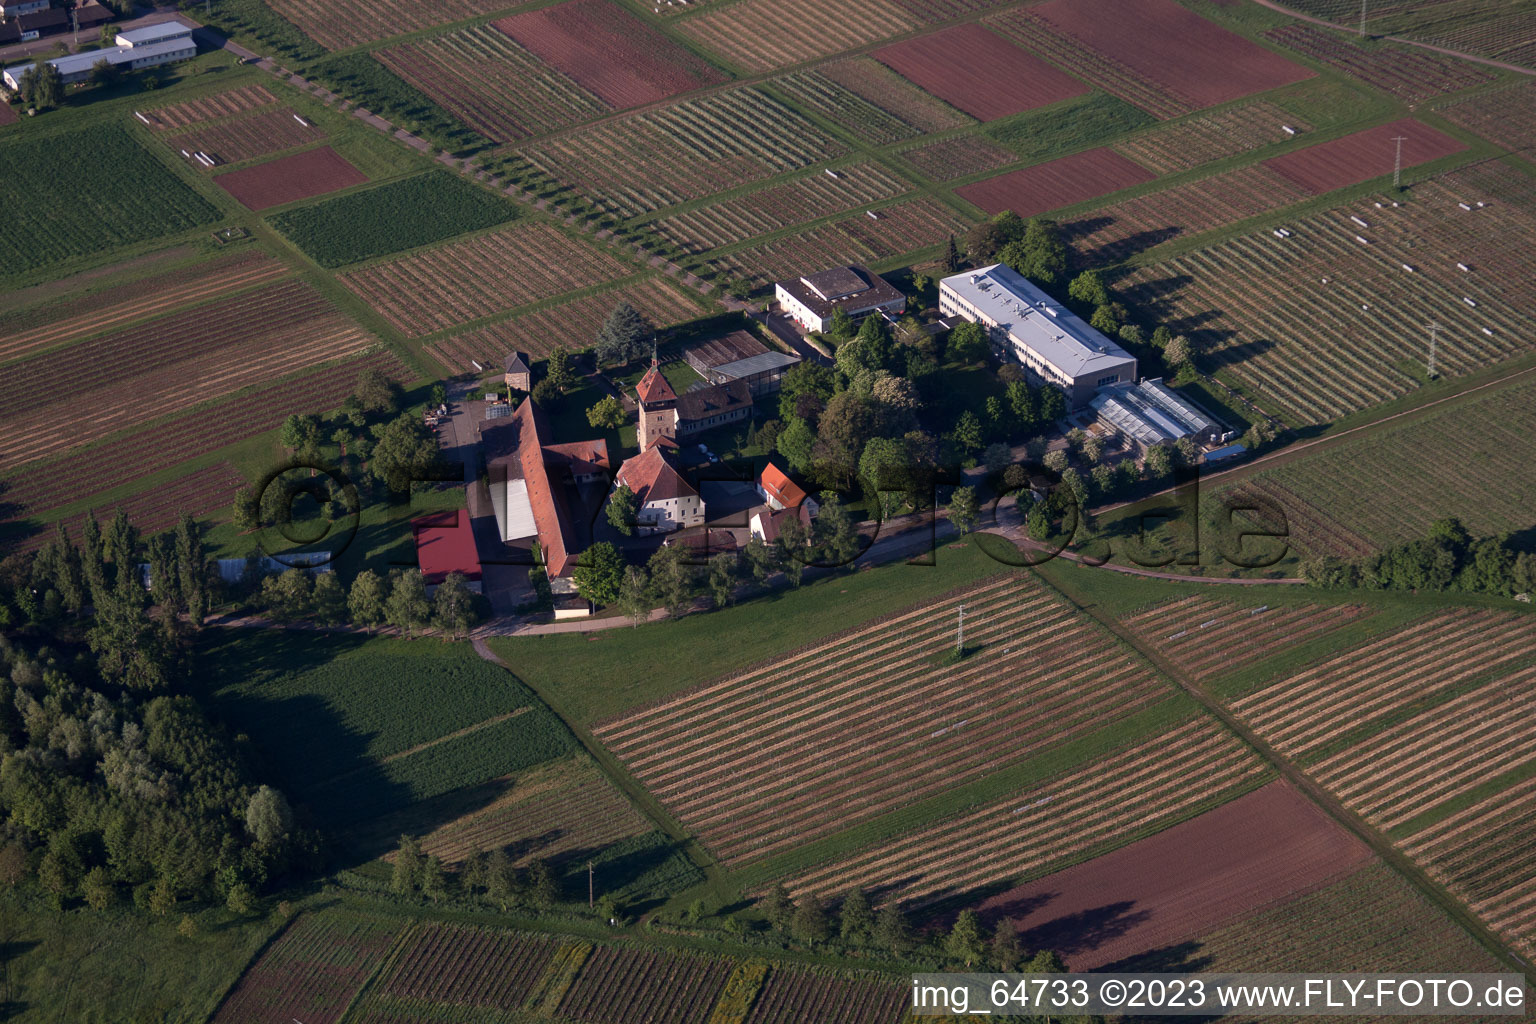 Vine Research Institute in Siebeldingen in the state Rhineland-Palatinate, Germany